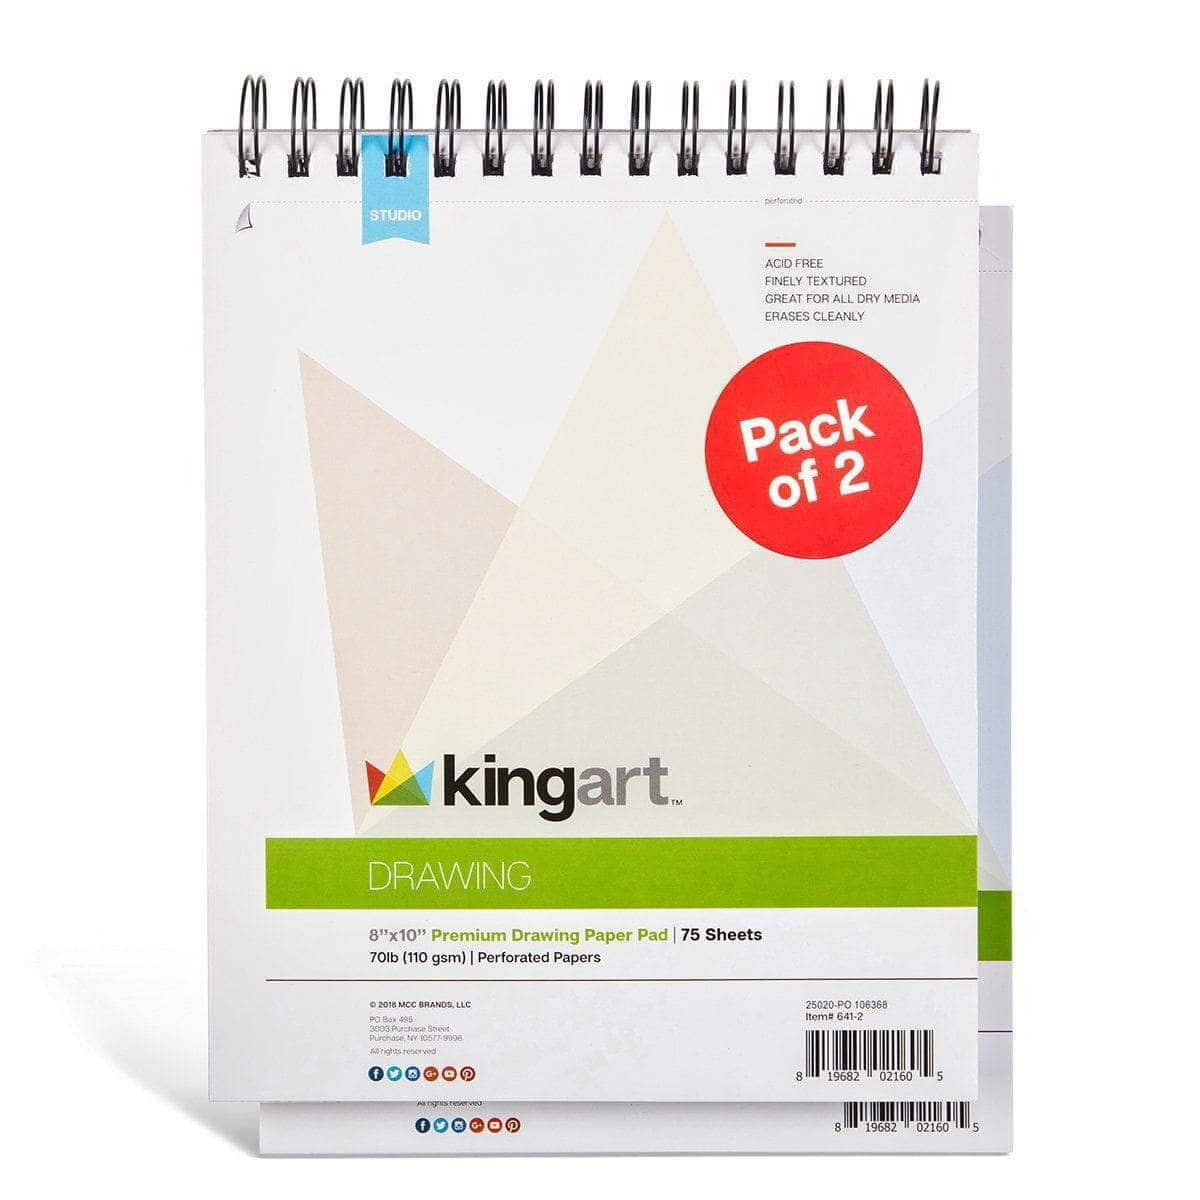 Kingart Top Spiral Drawing Pad 8x10 2 Pack - 75 Sheets